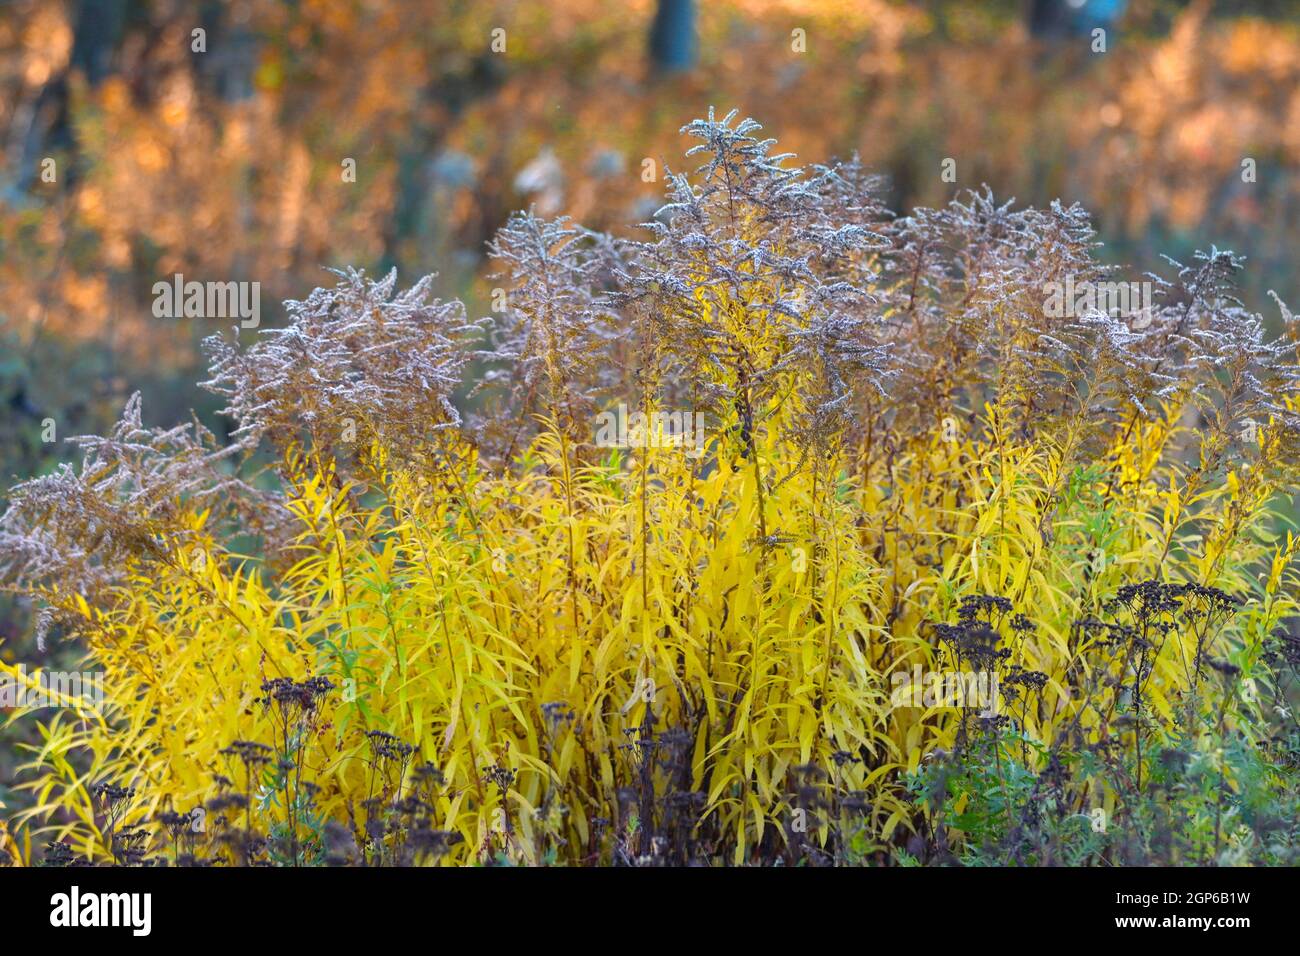 Goldenrod plant in the autumn season. Vegetable, autumn background. Stock Photo